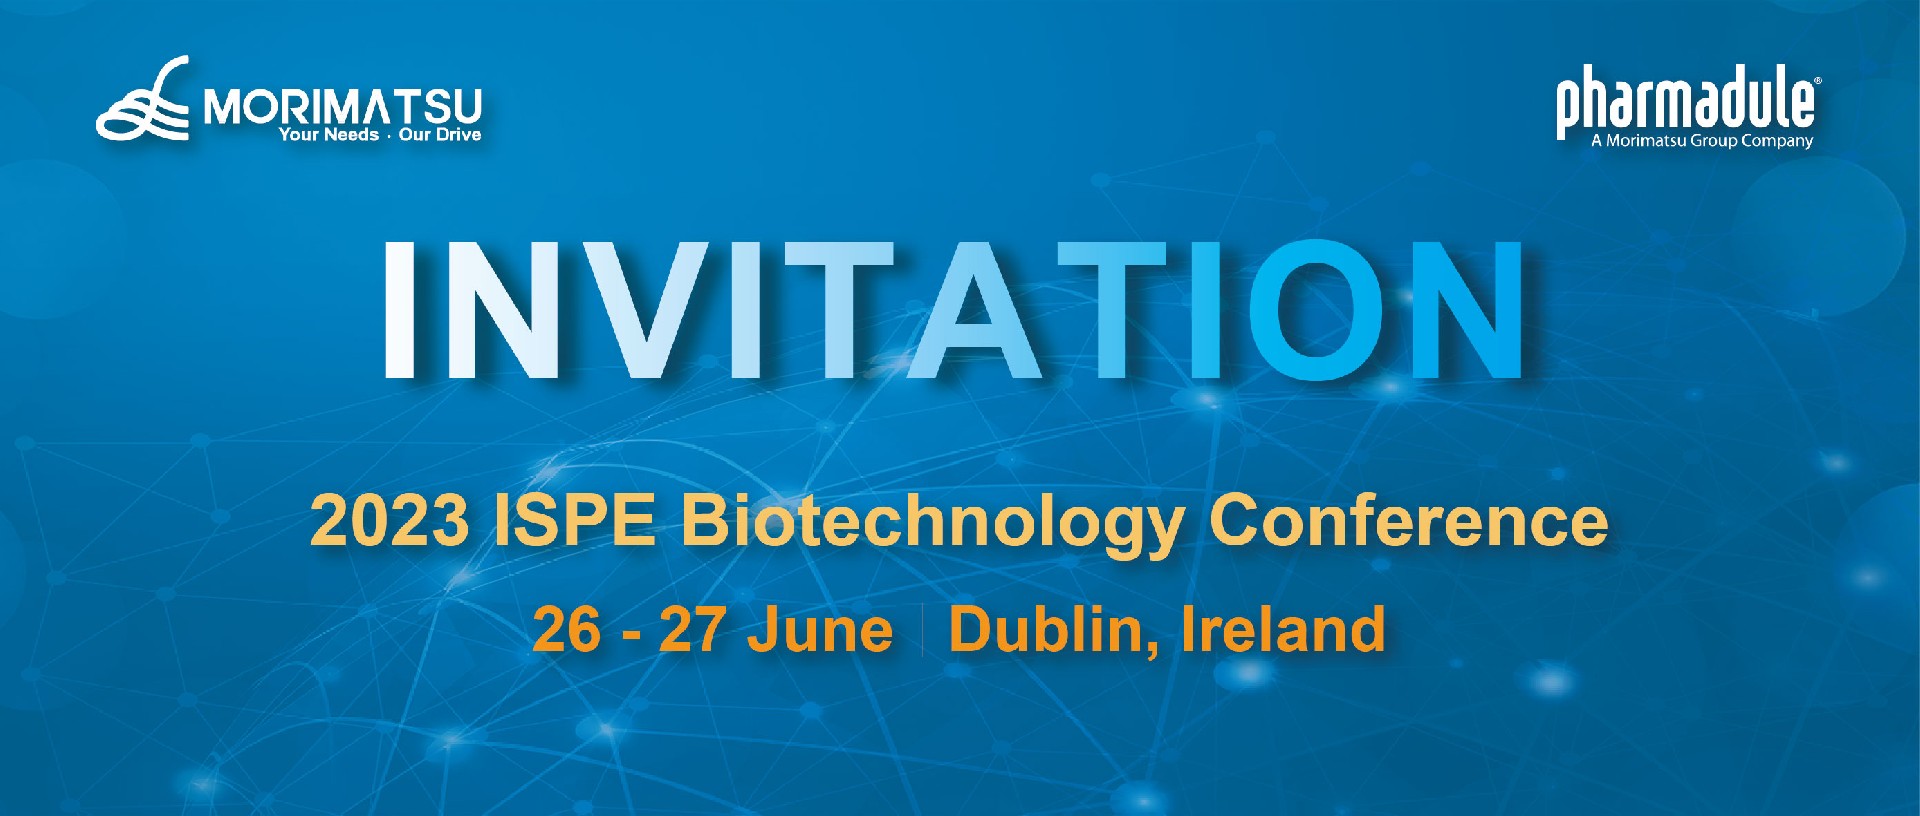 Invitation | Pharmadule Morimatsu invites you to attend 2023 ISPE Biotechnology Conference